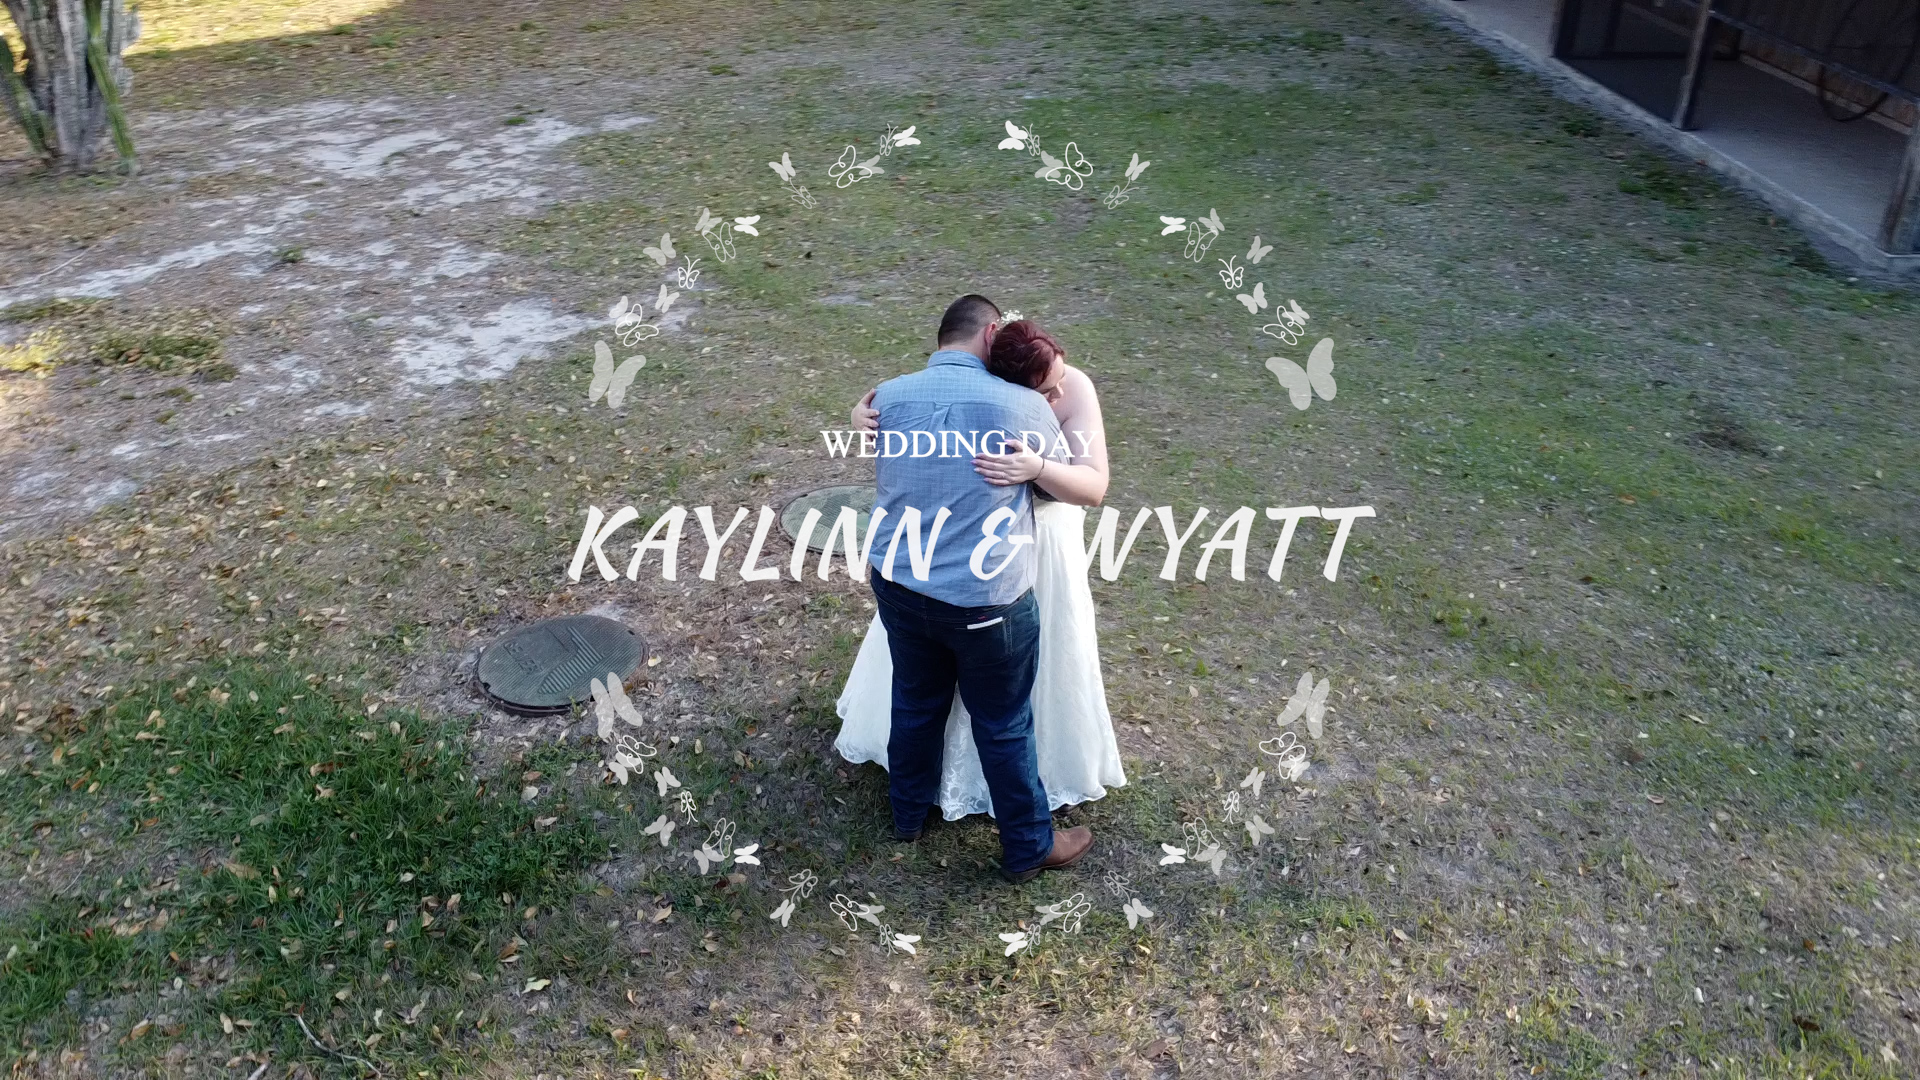 Kaylinn & Wyatt Wedding – Trailer